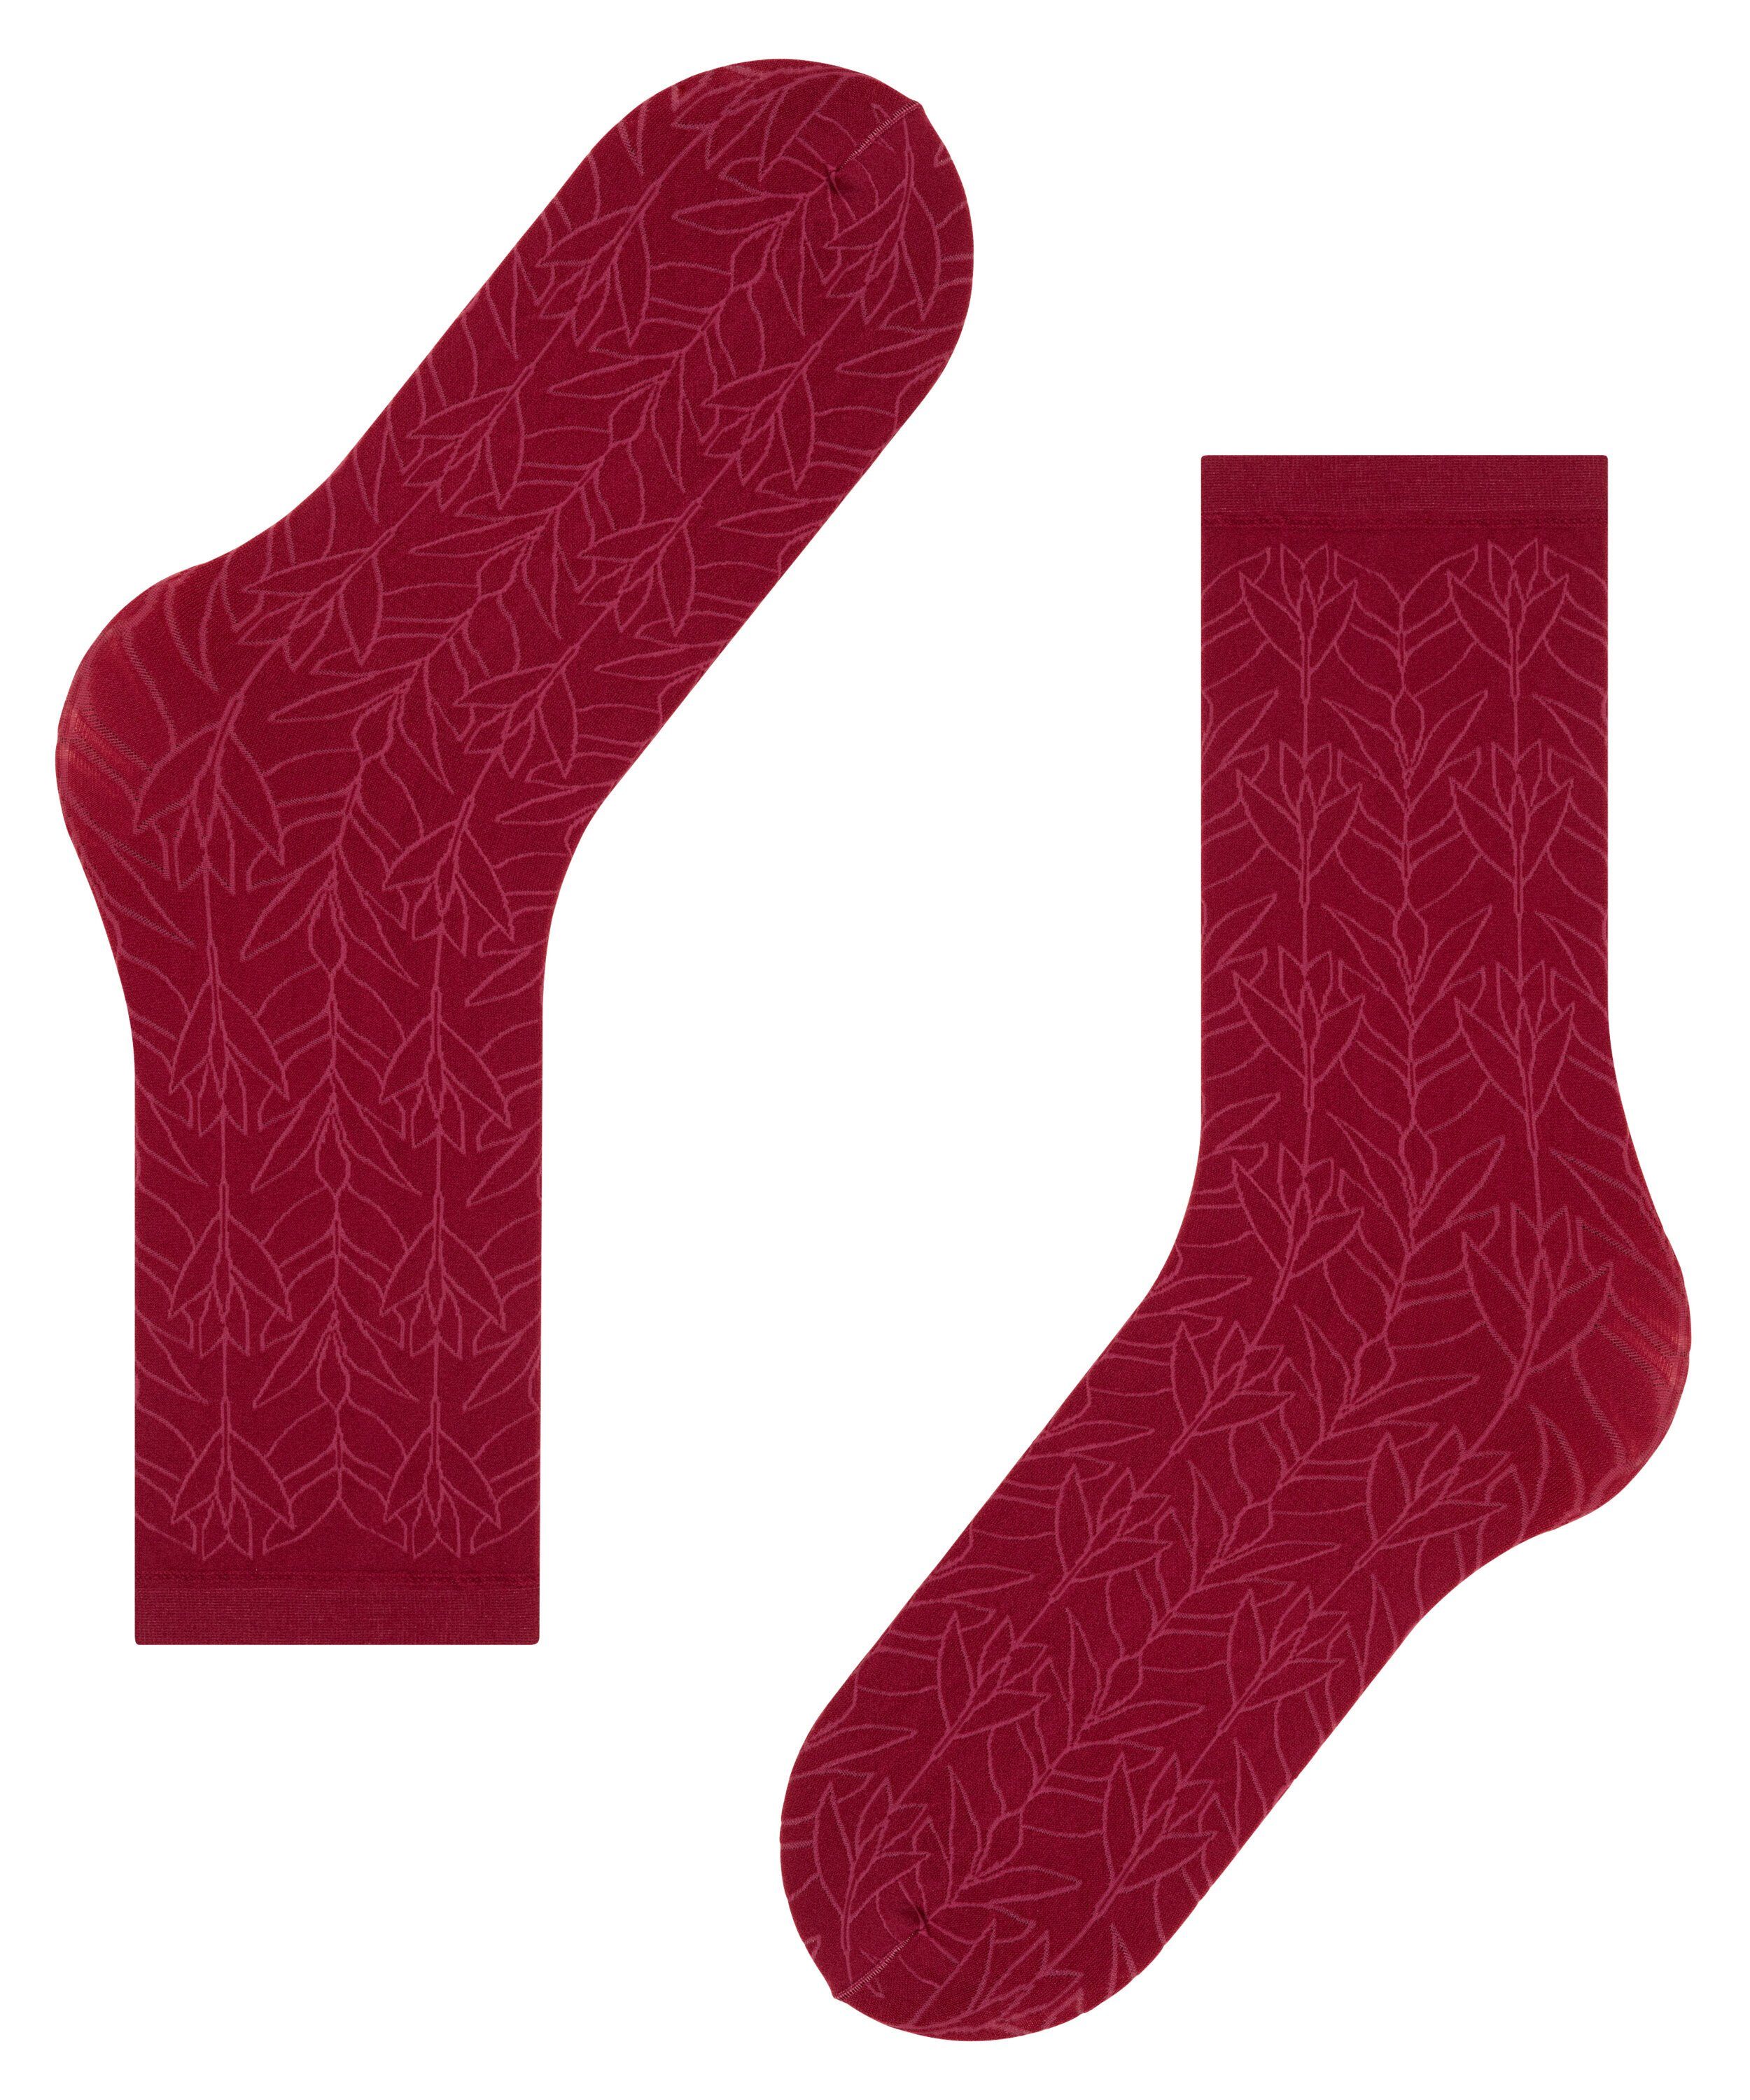 Nile FALKE red Jewel mit grafischer Musterung (1-Paar) plum (8236) Feinkniestrümpfe